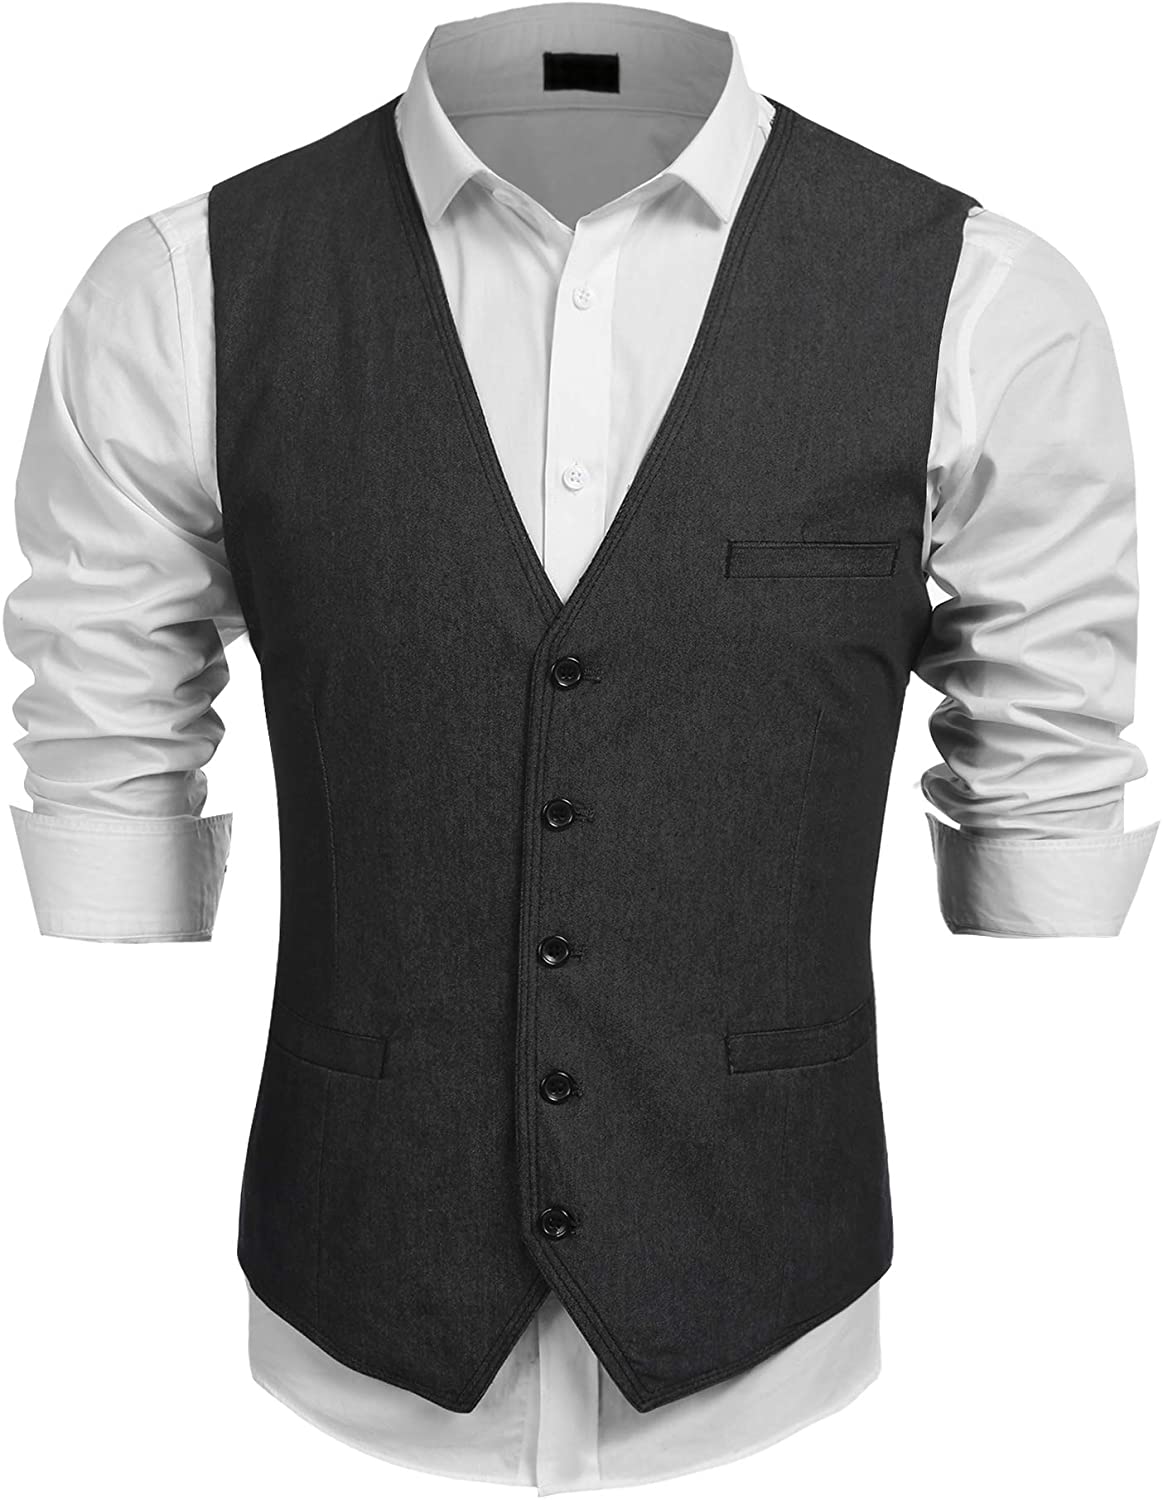 JINIDU Herrenweste Formal Hochzeit Party Weste Slim fit Business Layered Suit Vest 